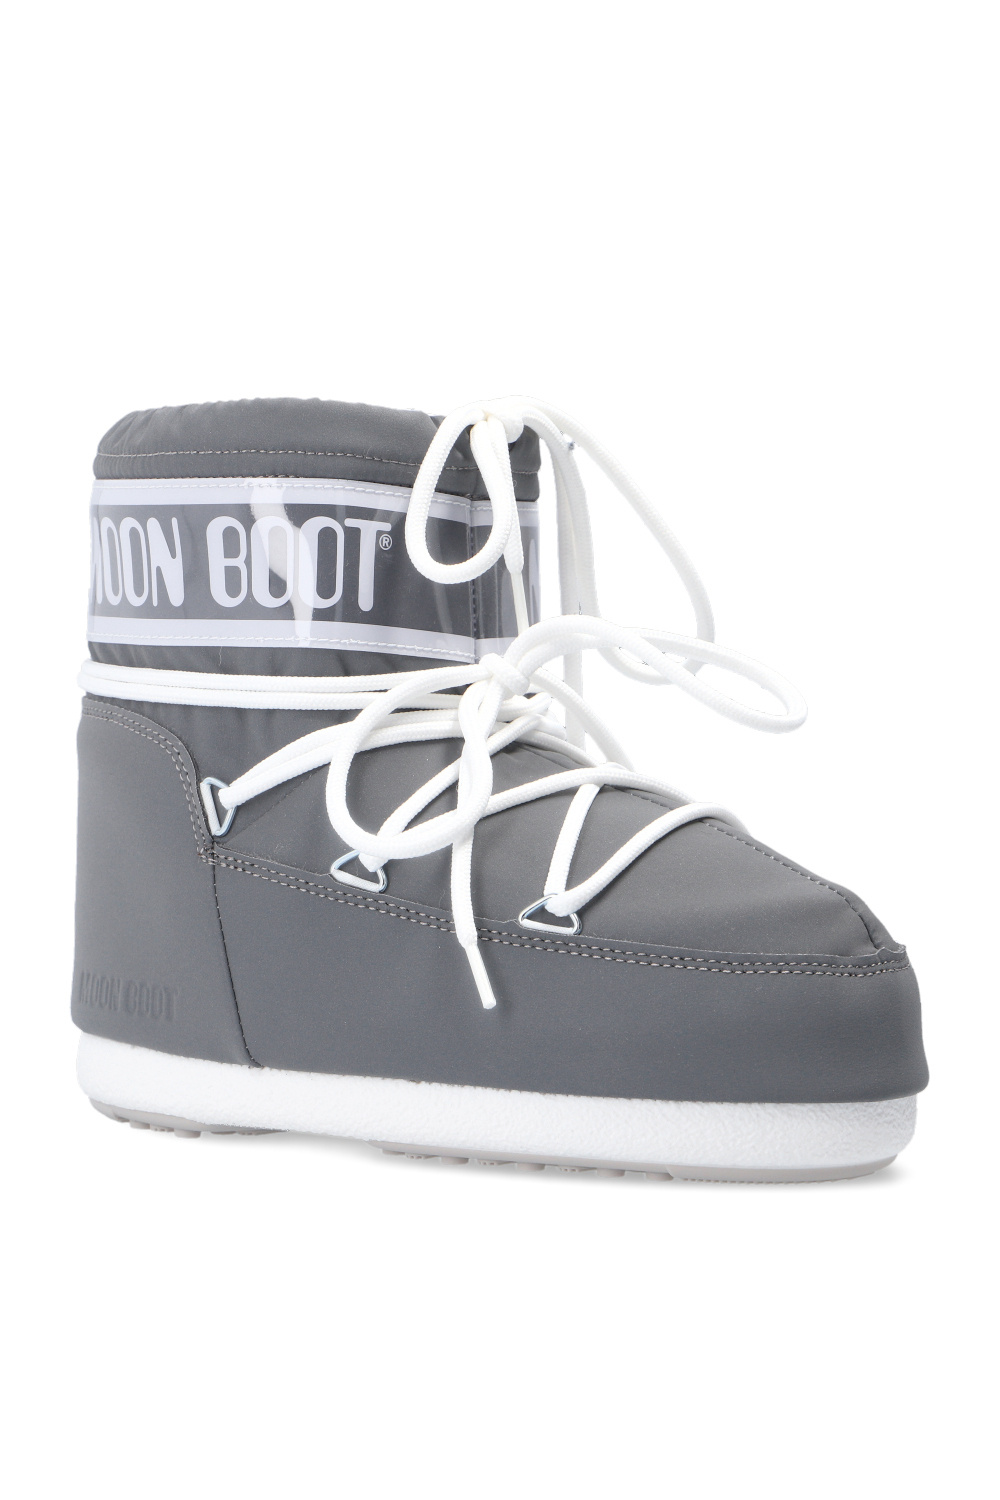 Moon Boot ‘Mars’ snow boots